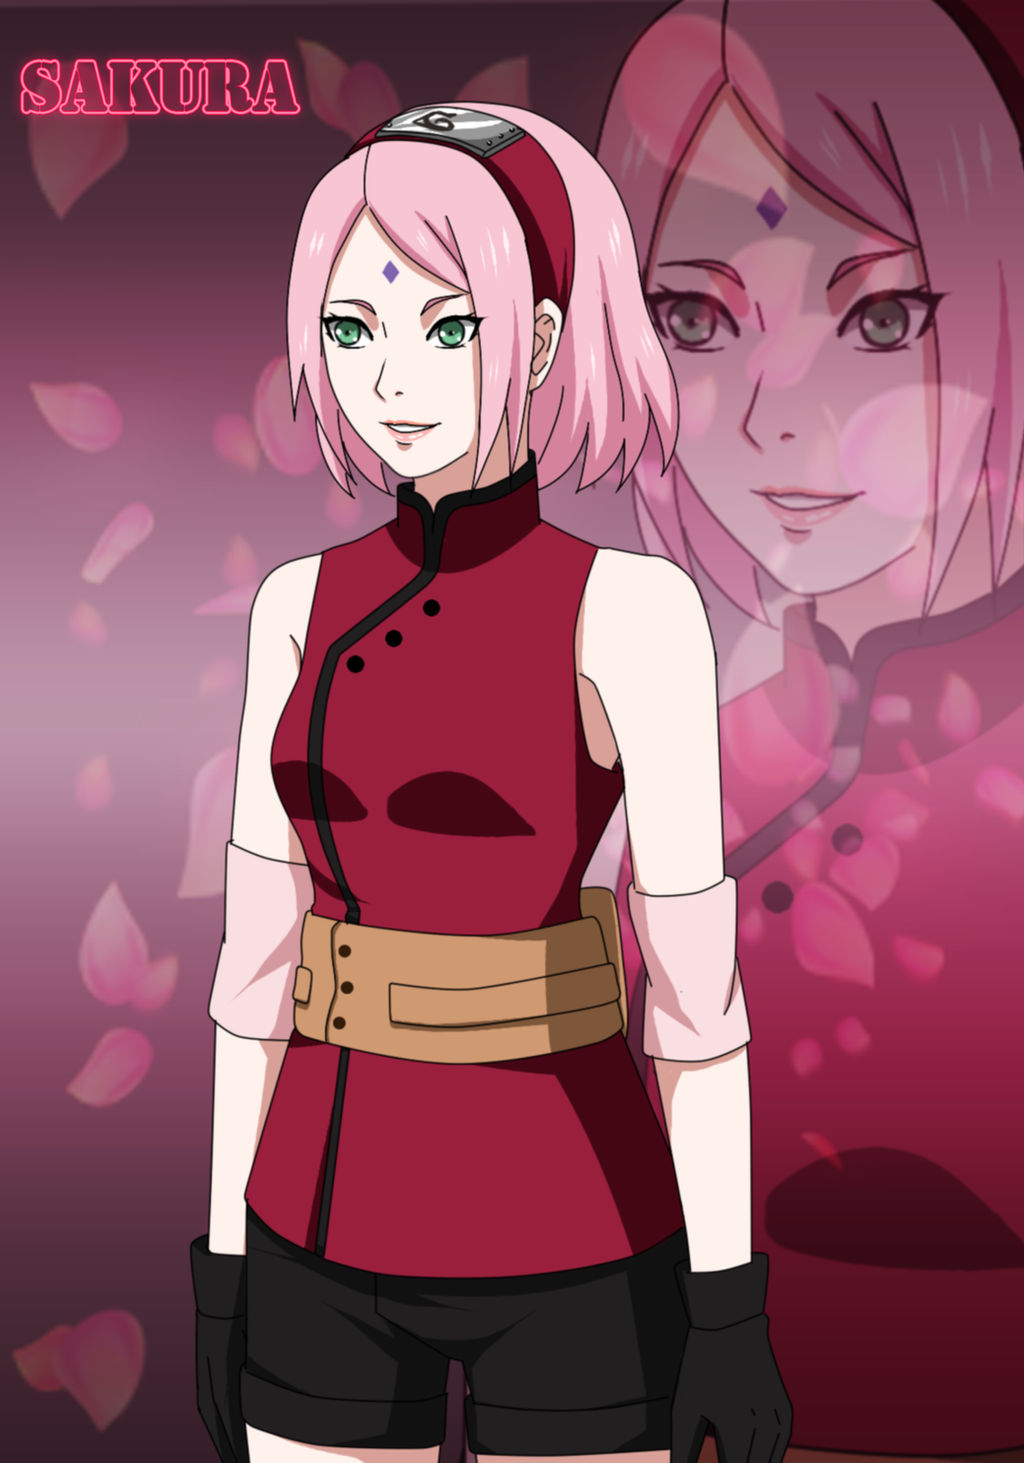 The Last Naruto The Movie Sakura Haruno By Whiterabbit20